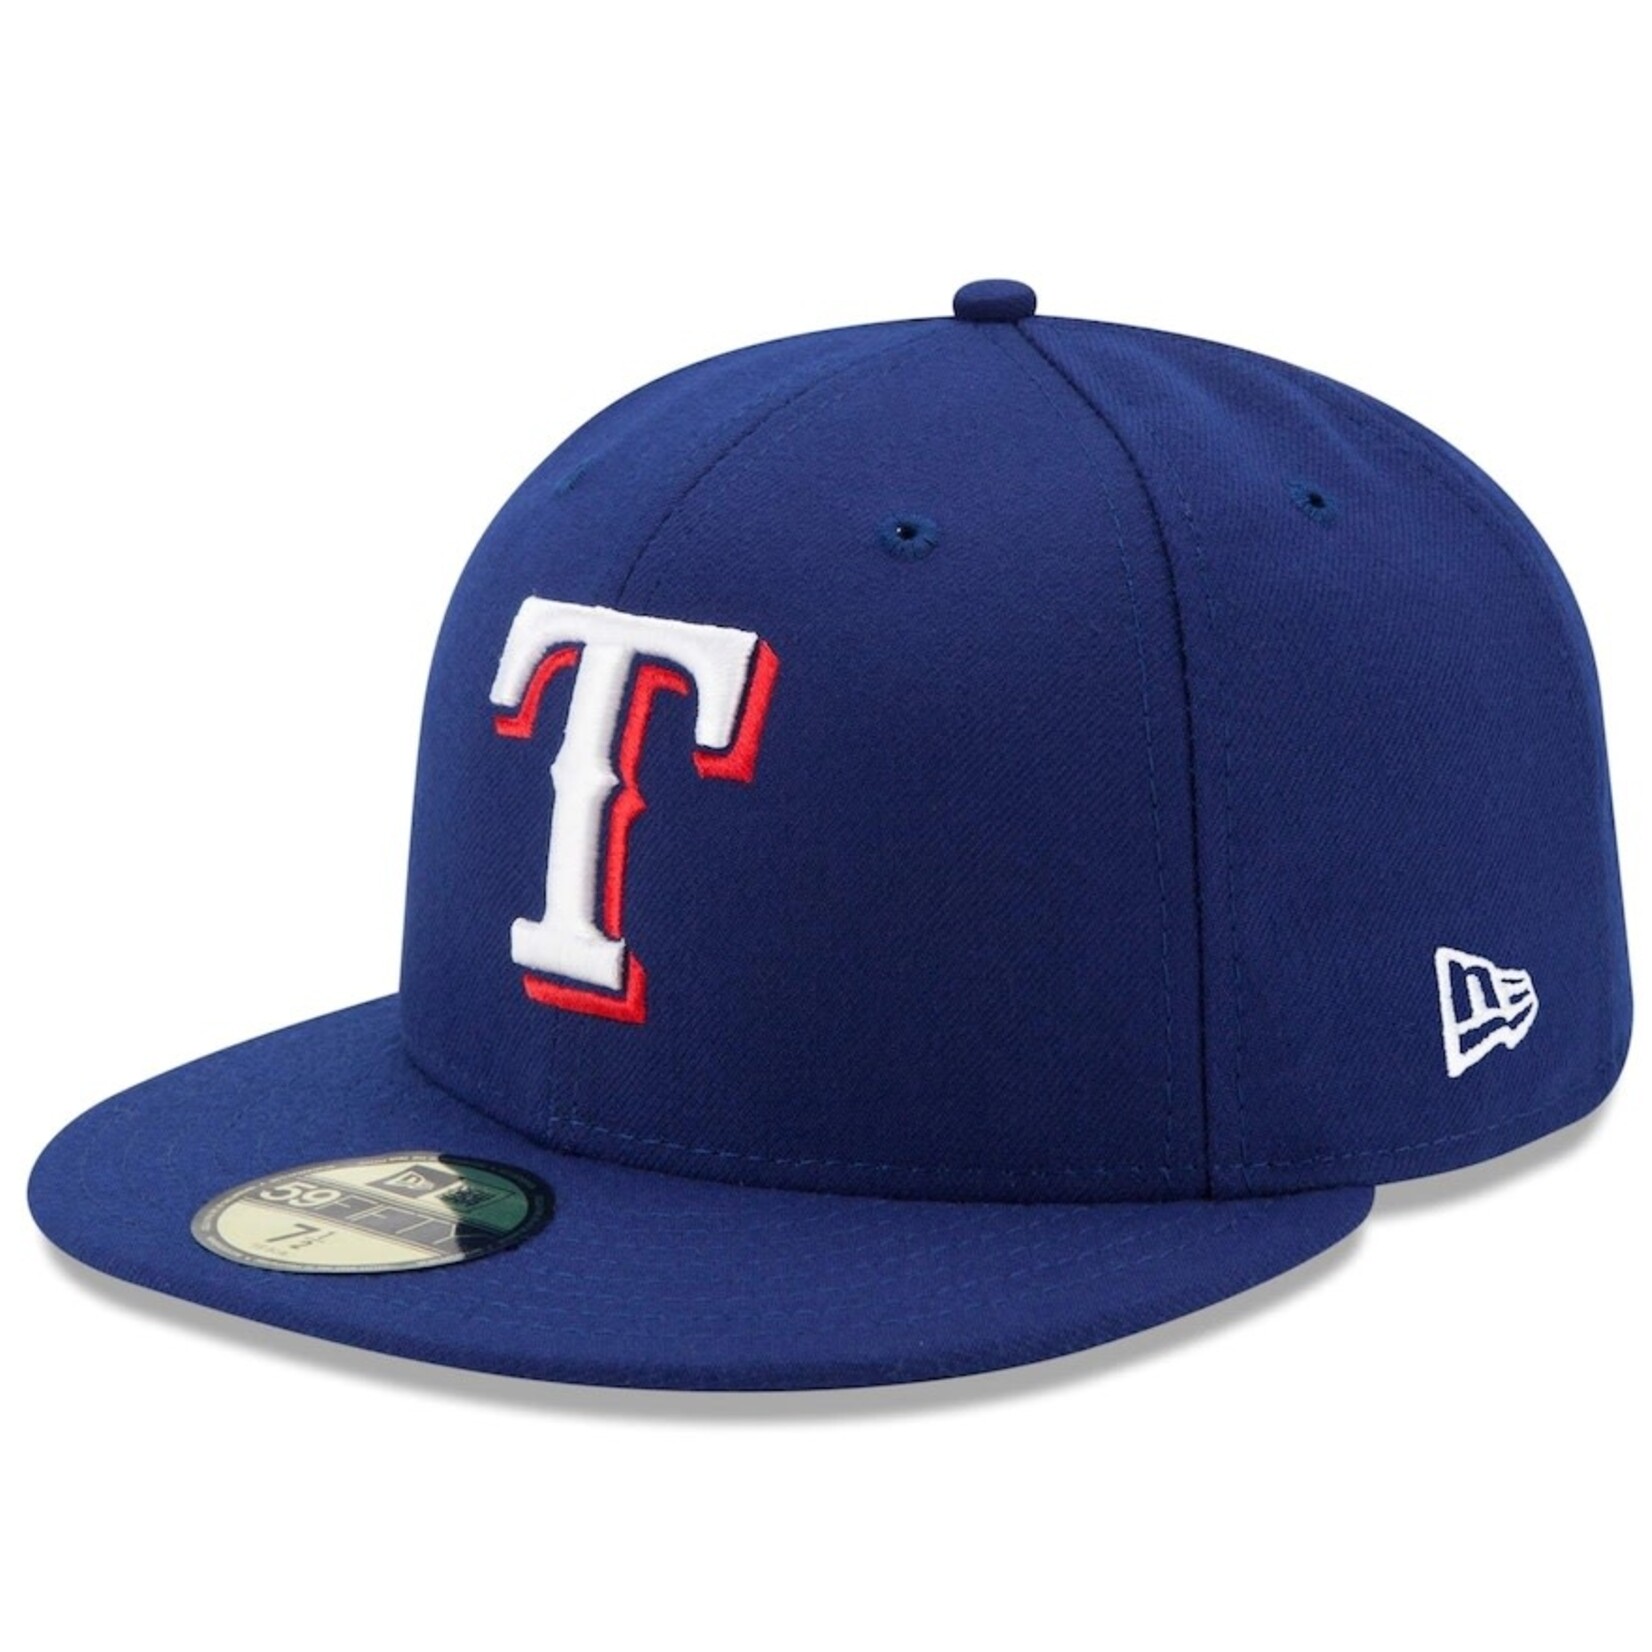 New Era New Era Hat, 5950 On-Field AC, MLB, Texas Rangers, Game